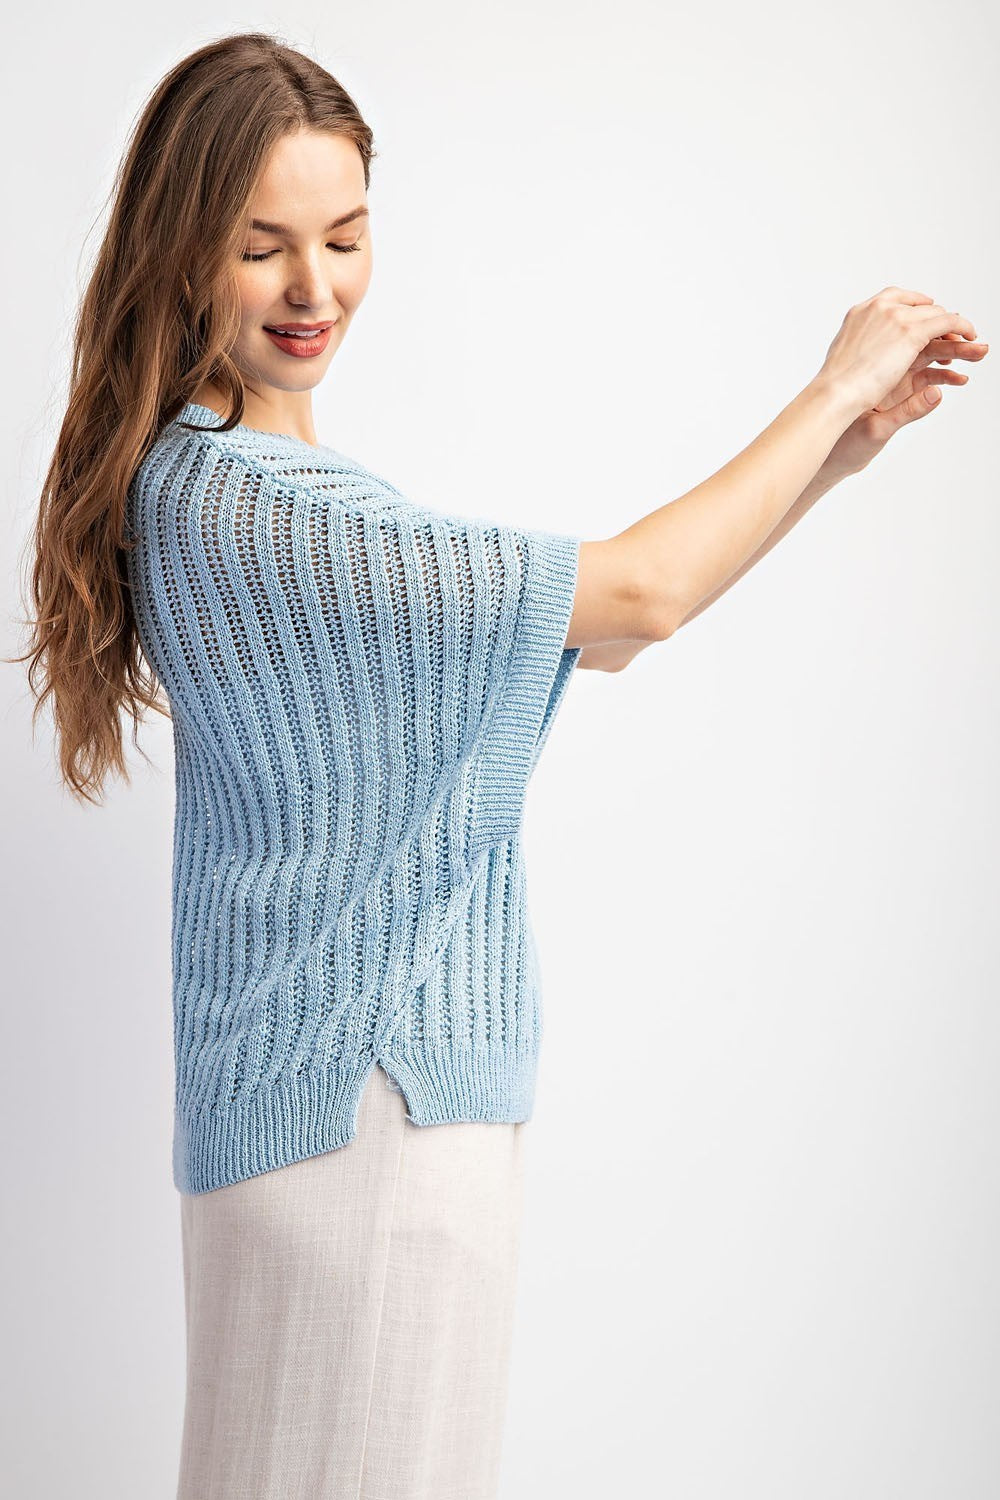 Baby Blu Crochet Sweater